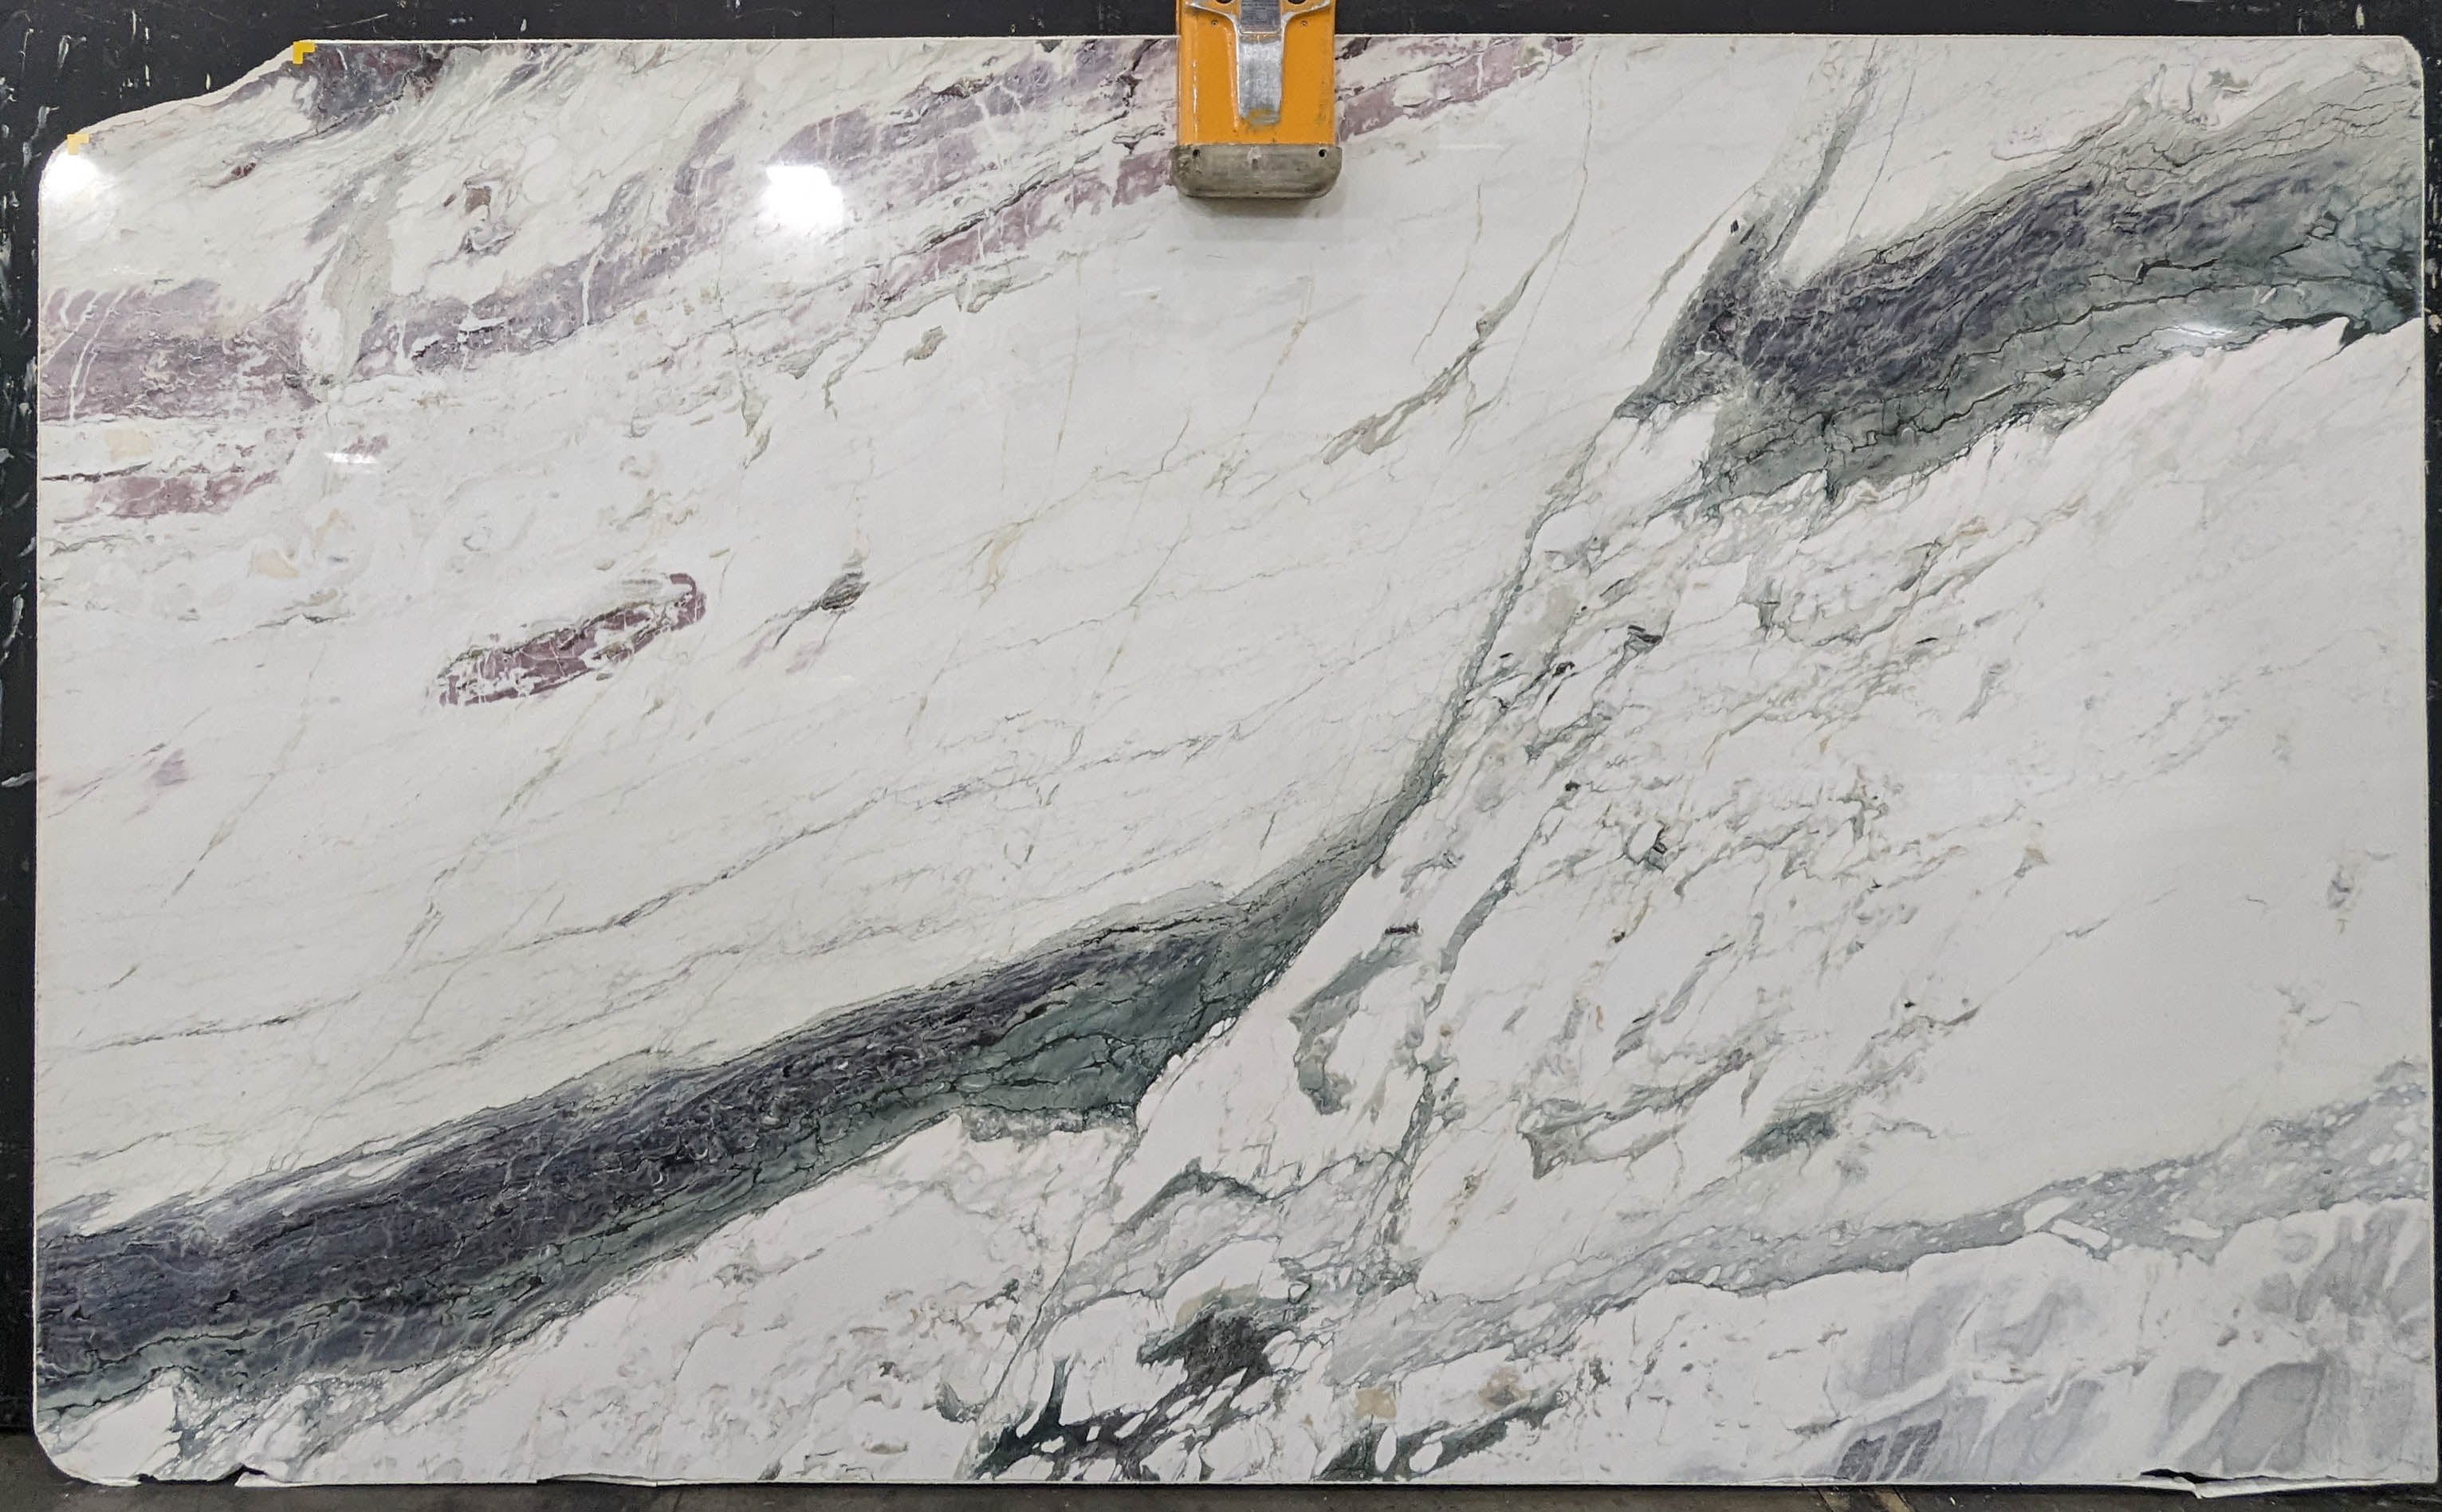  Breccia Capraia Marble Slab 3/4  Polished Stone - VR7428#43 -  71x90 